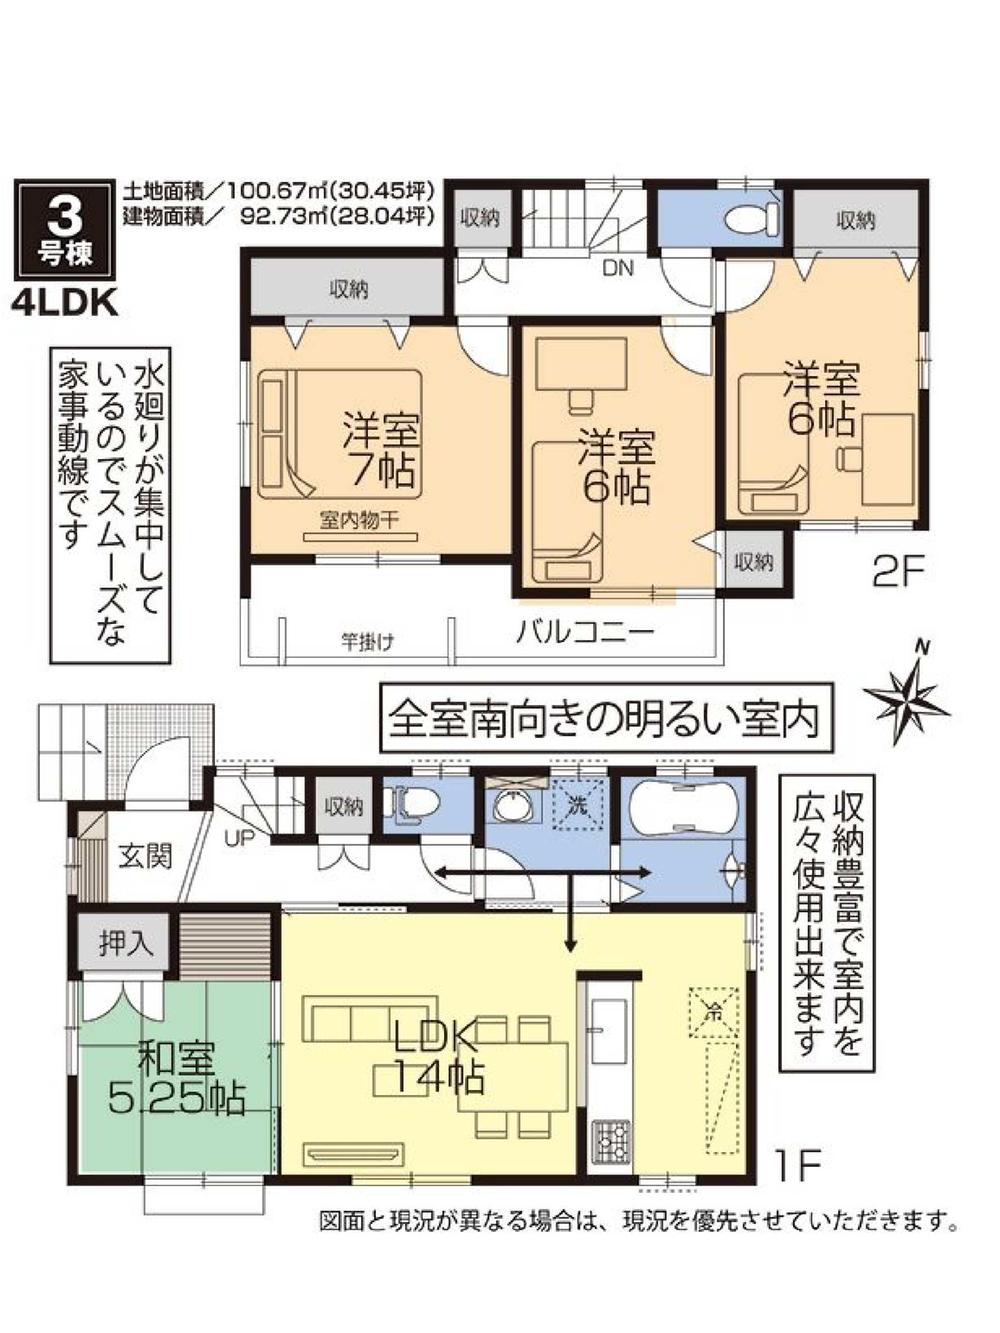 Floor plan. (3 Building), Price 32,900,000 yen, 4LDK, Land area 100.67 sq m , Building area 92.73 sq m